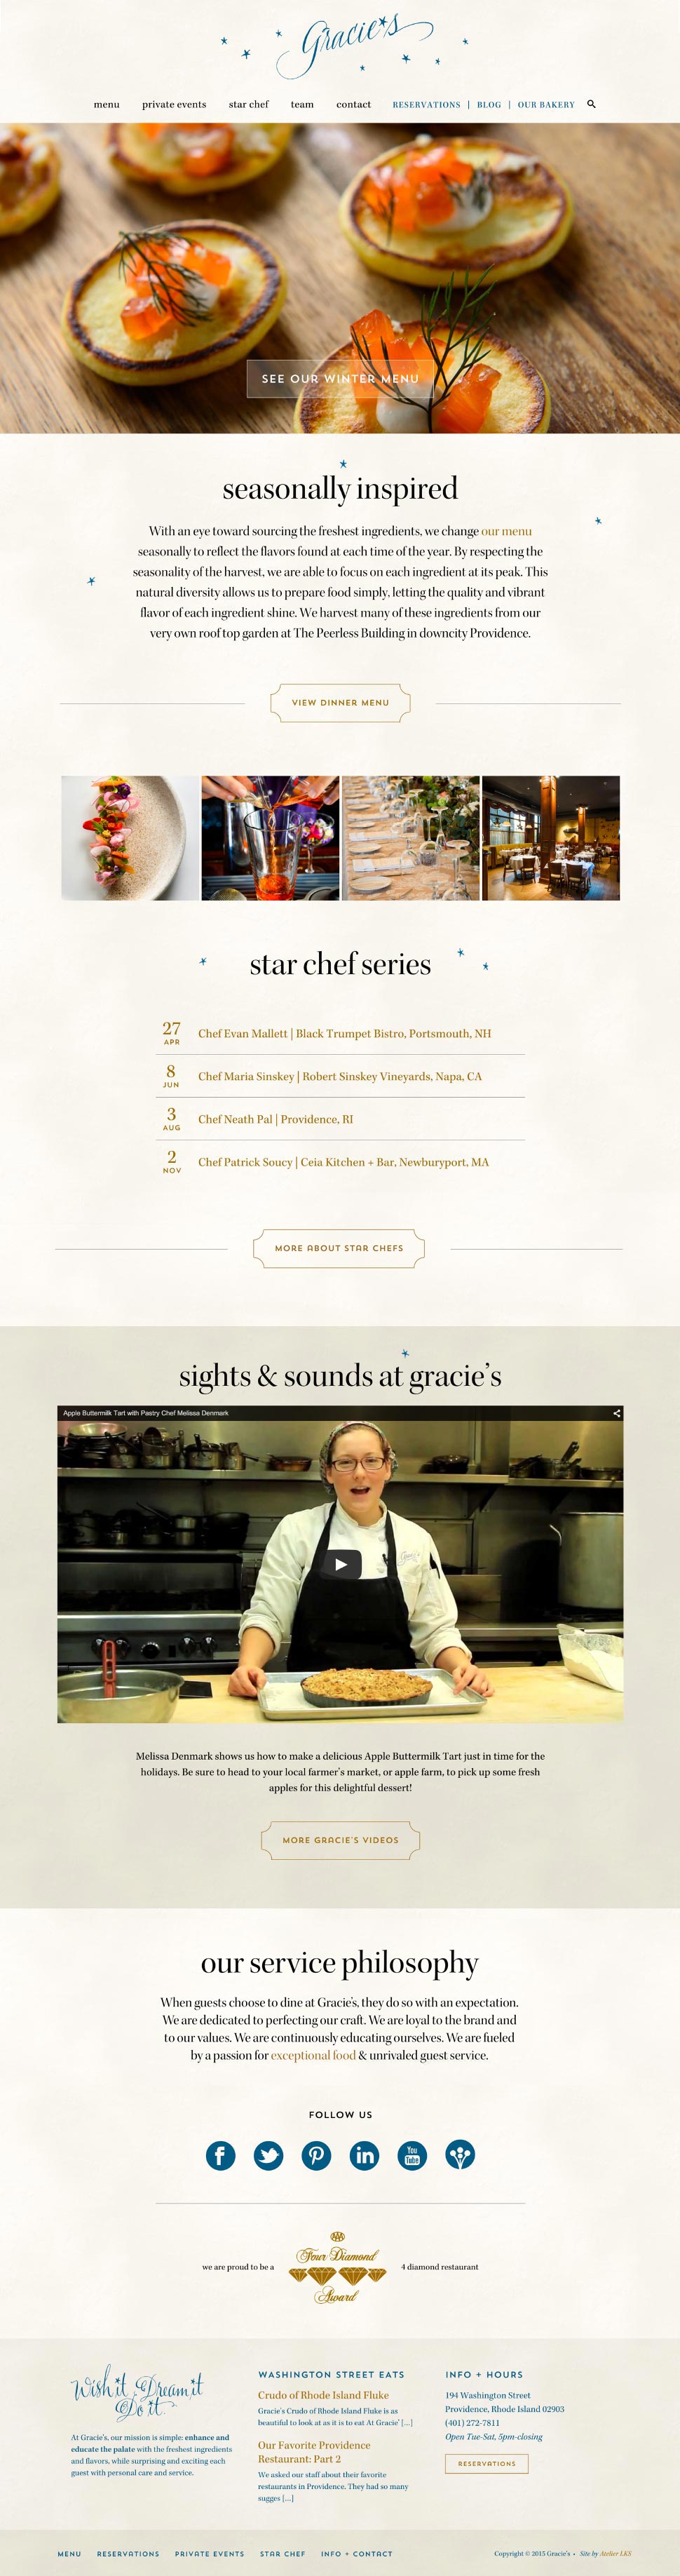 responsive website design for restaurants